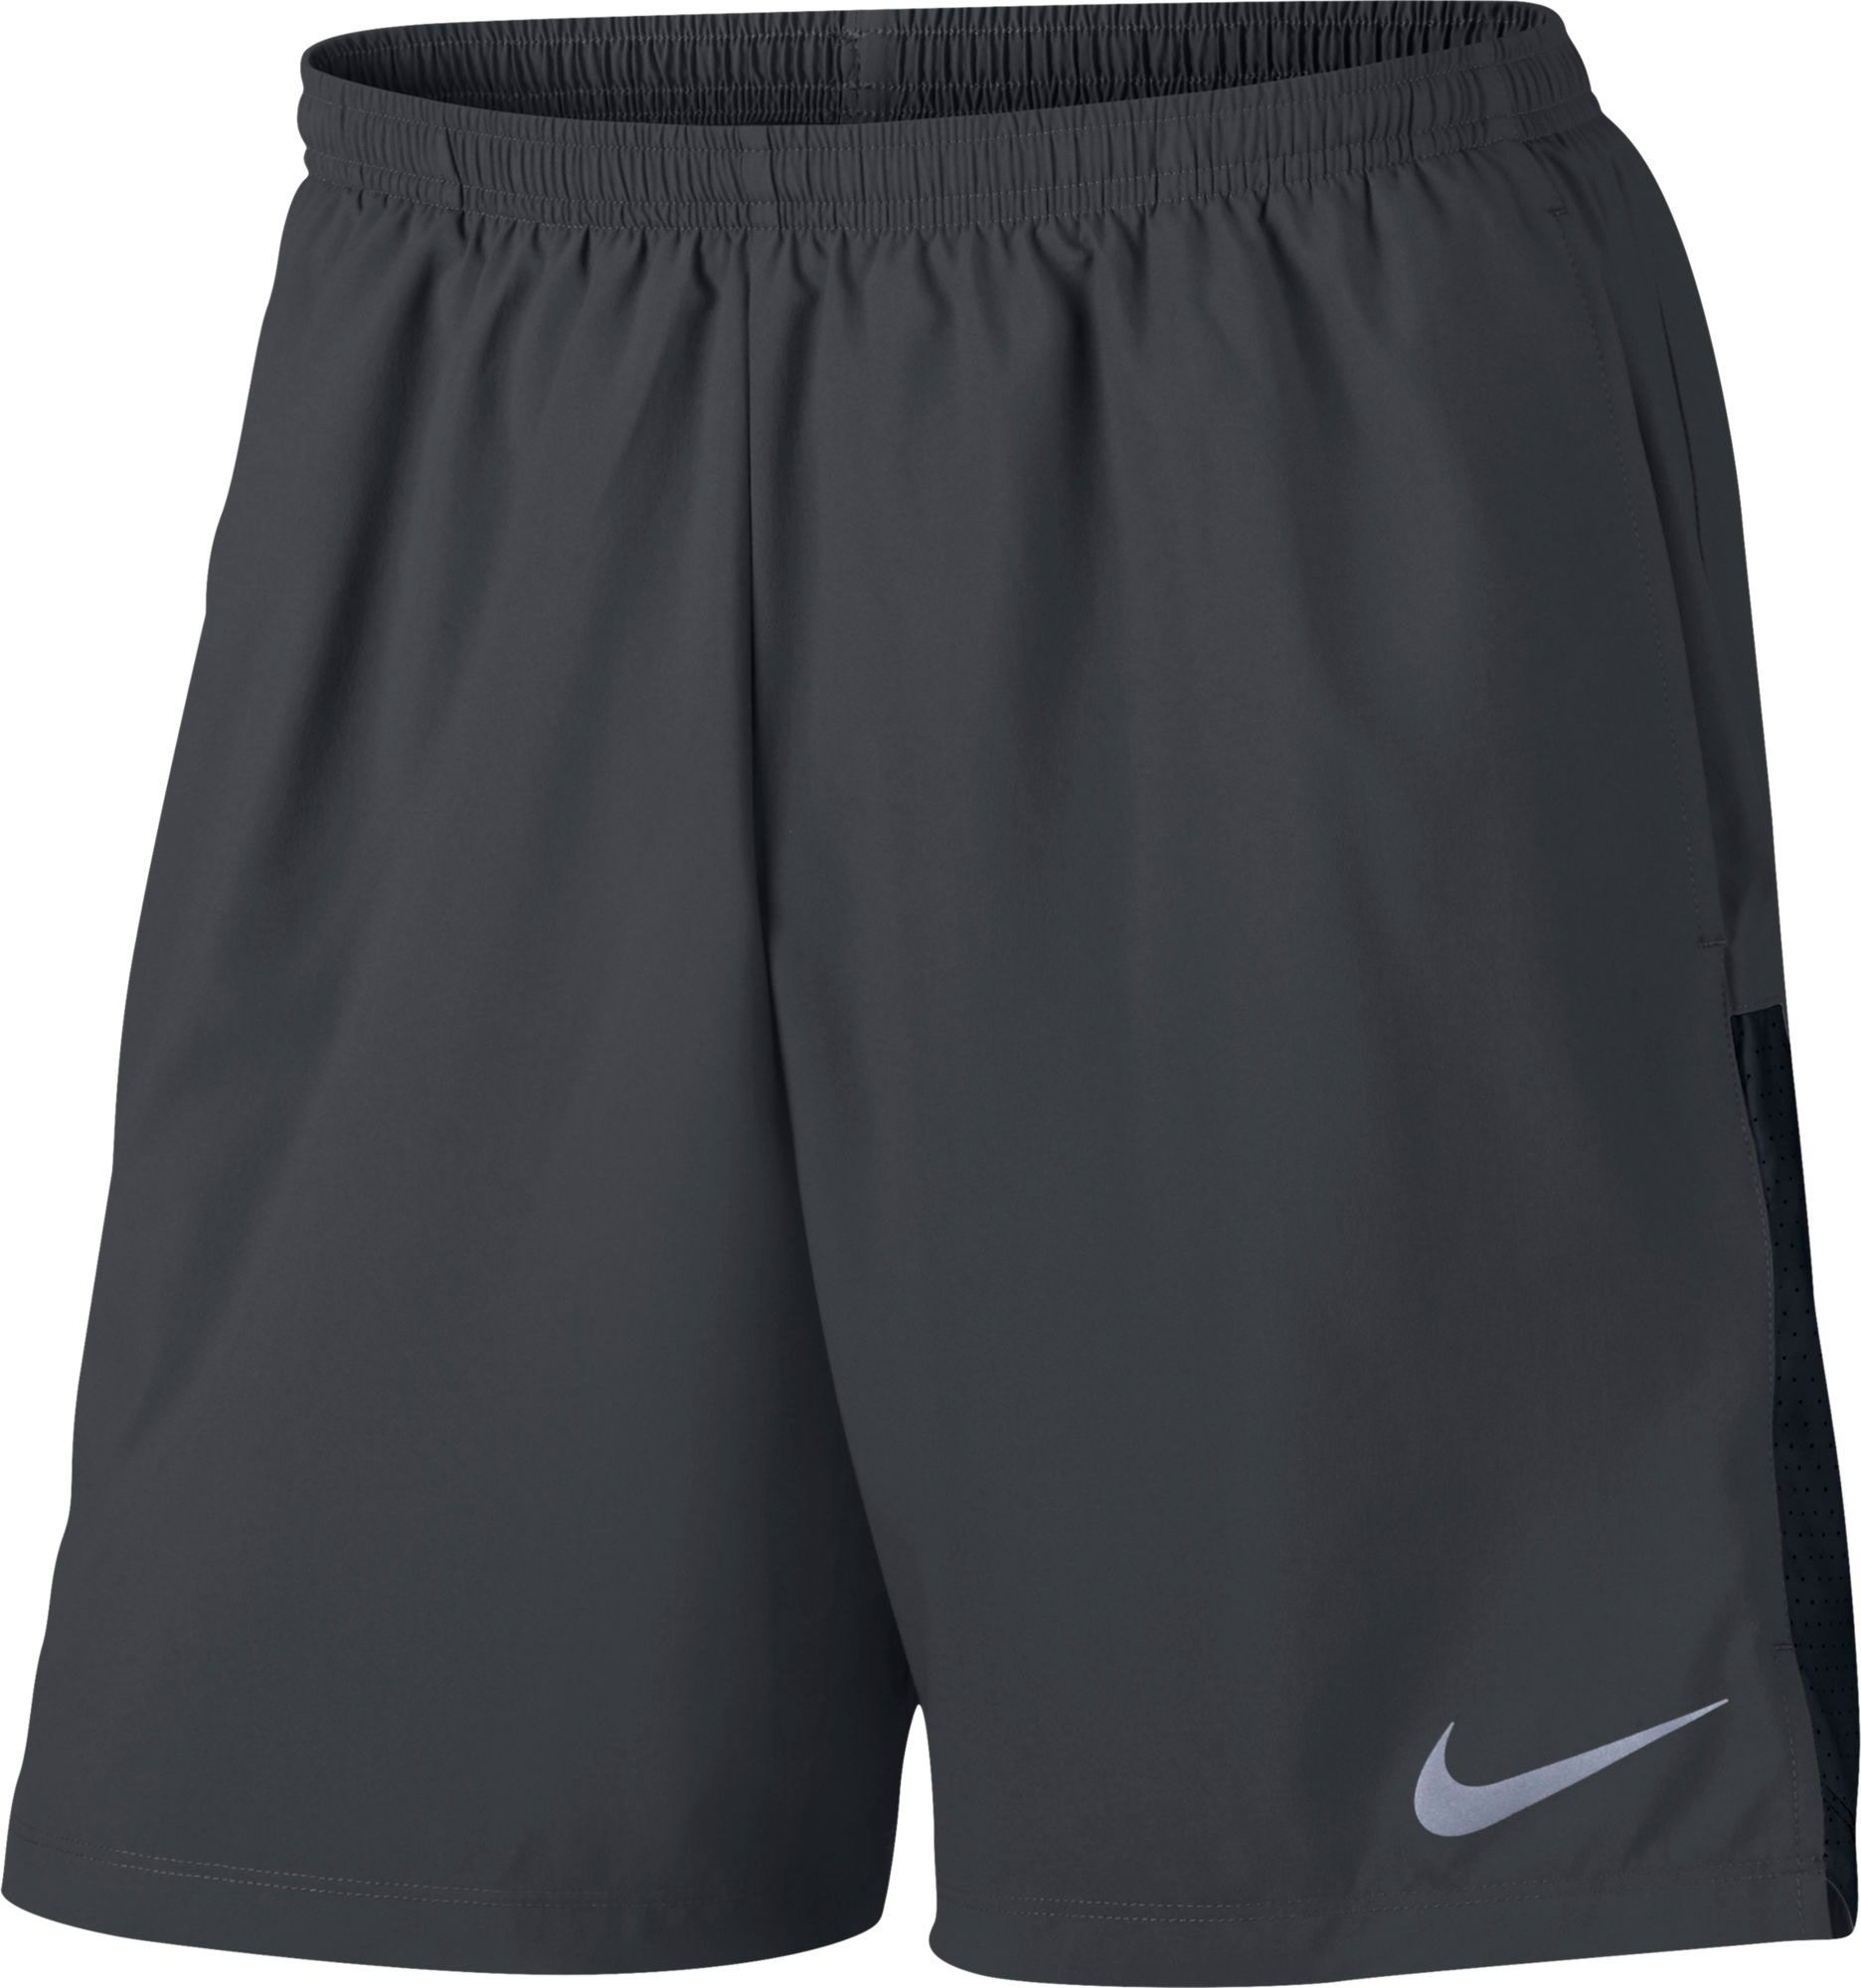 Nike Men's Running Shorts | Best Price Guarantee at DICK'S